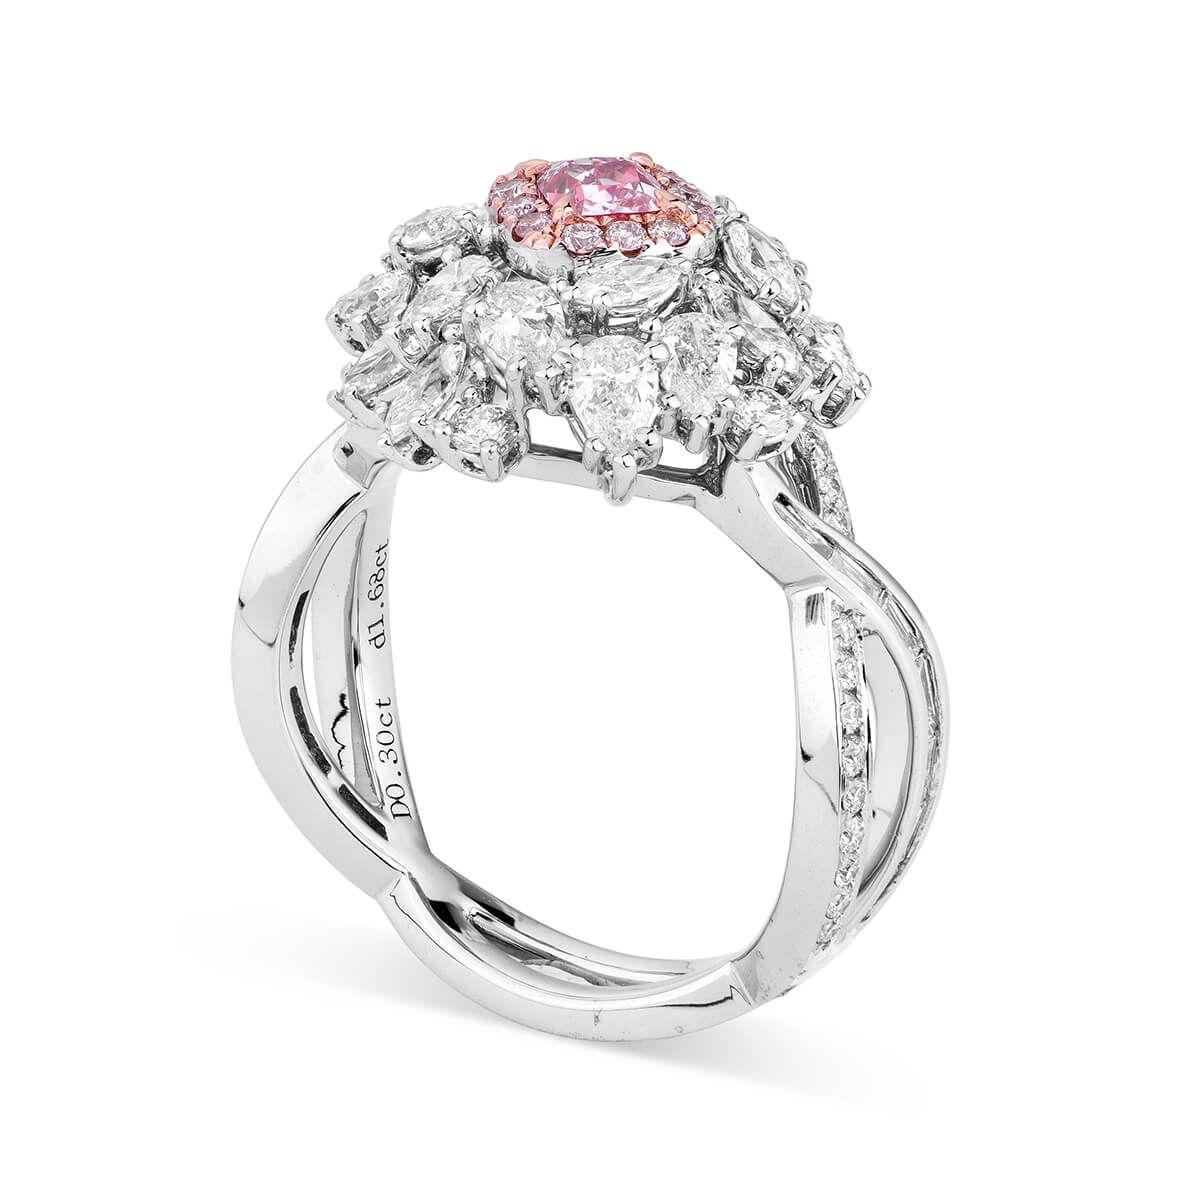 Fancy Light Purplish Pink Diamond Ring, 1.98 Ct. TW, Cushion shape, GIA Certified, 5192056913